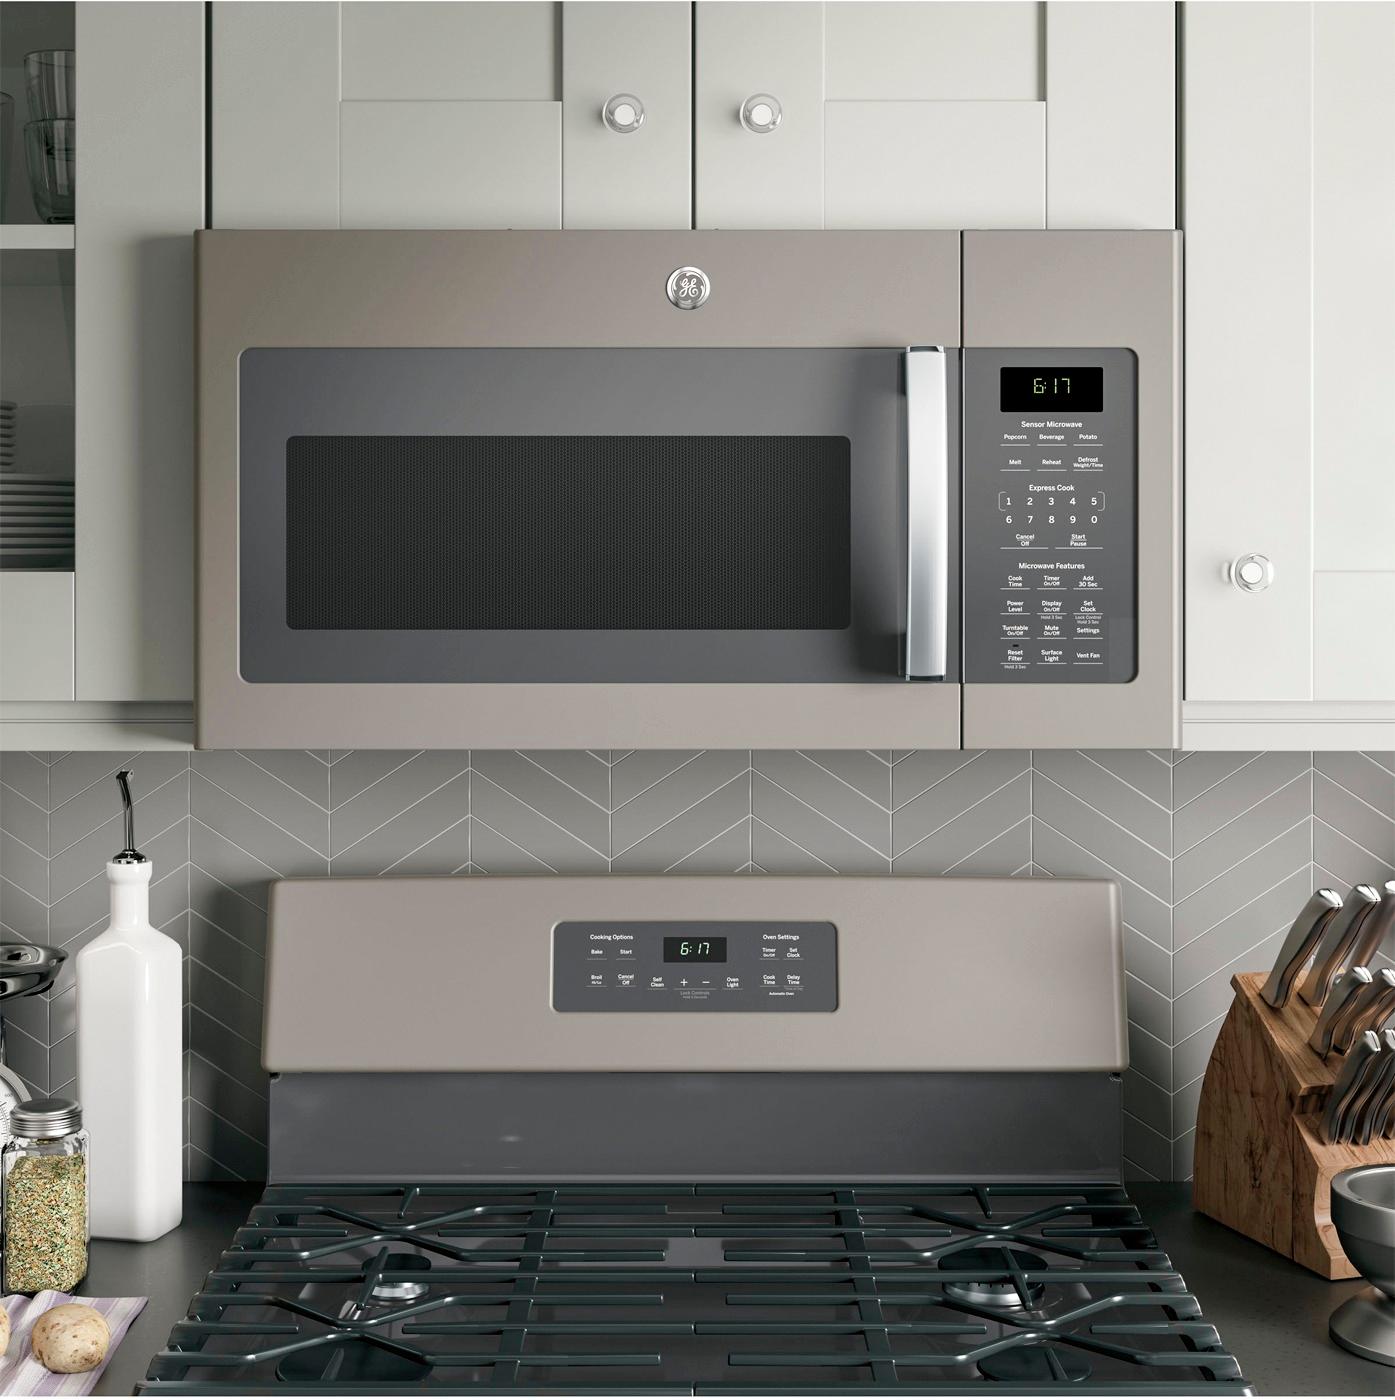 GE® .7 Cu. Ft. Capacity Countertop Microwave Oven - JES735WJ - GE Appliances